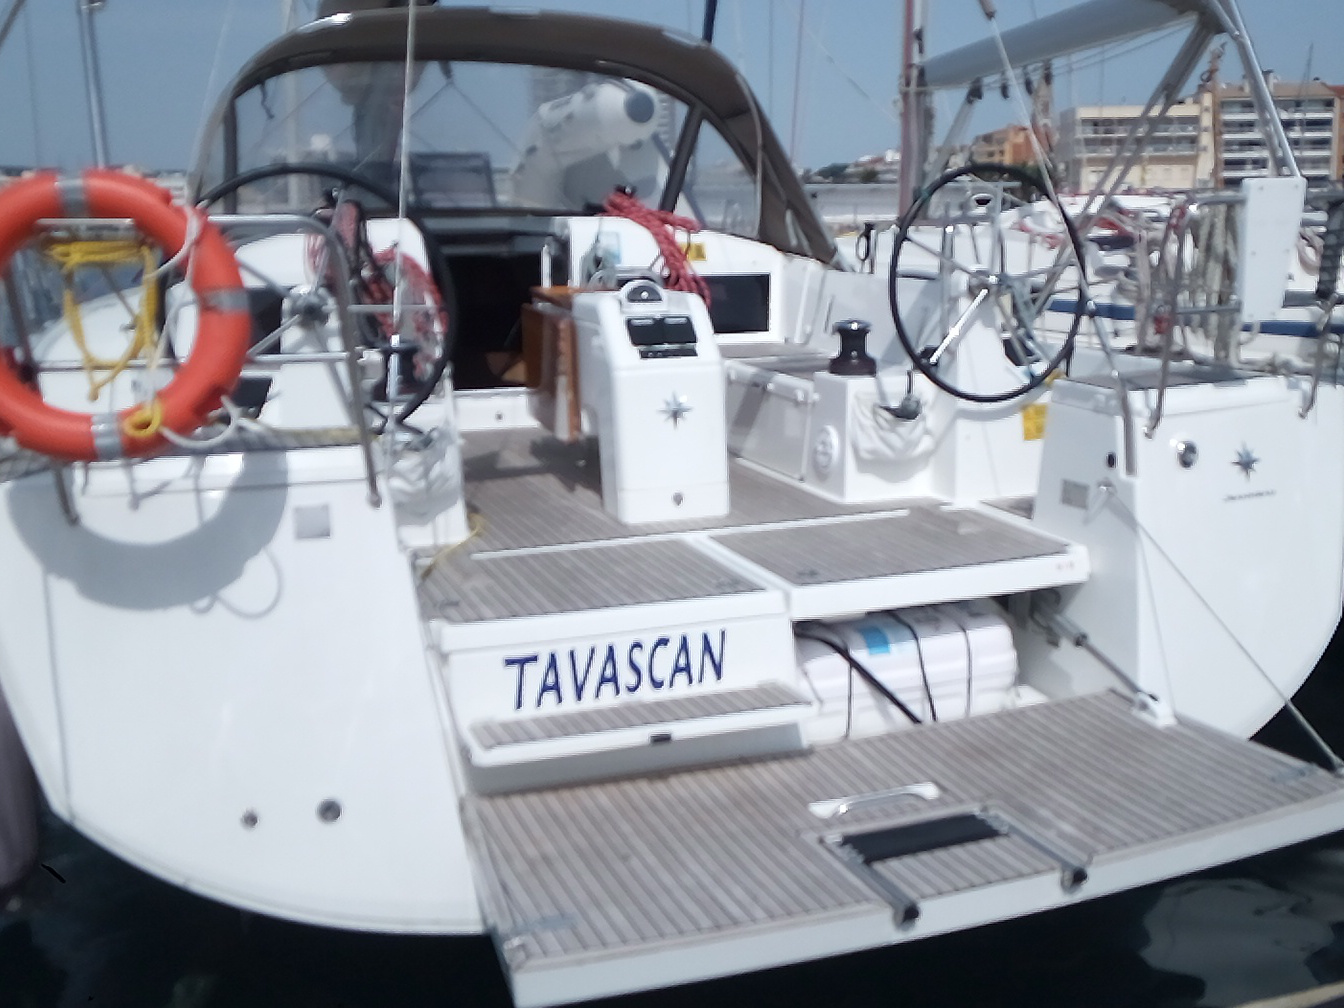 Sun Odyssey 440 - Yacht Charter Palamos & Boat hire in Spain Catalonia Costa Brava Girona Palamos Palamos 2